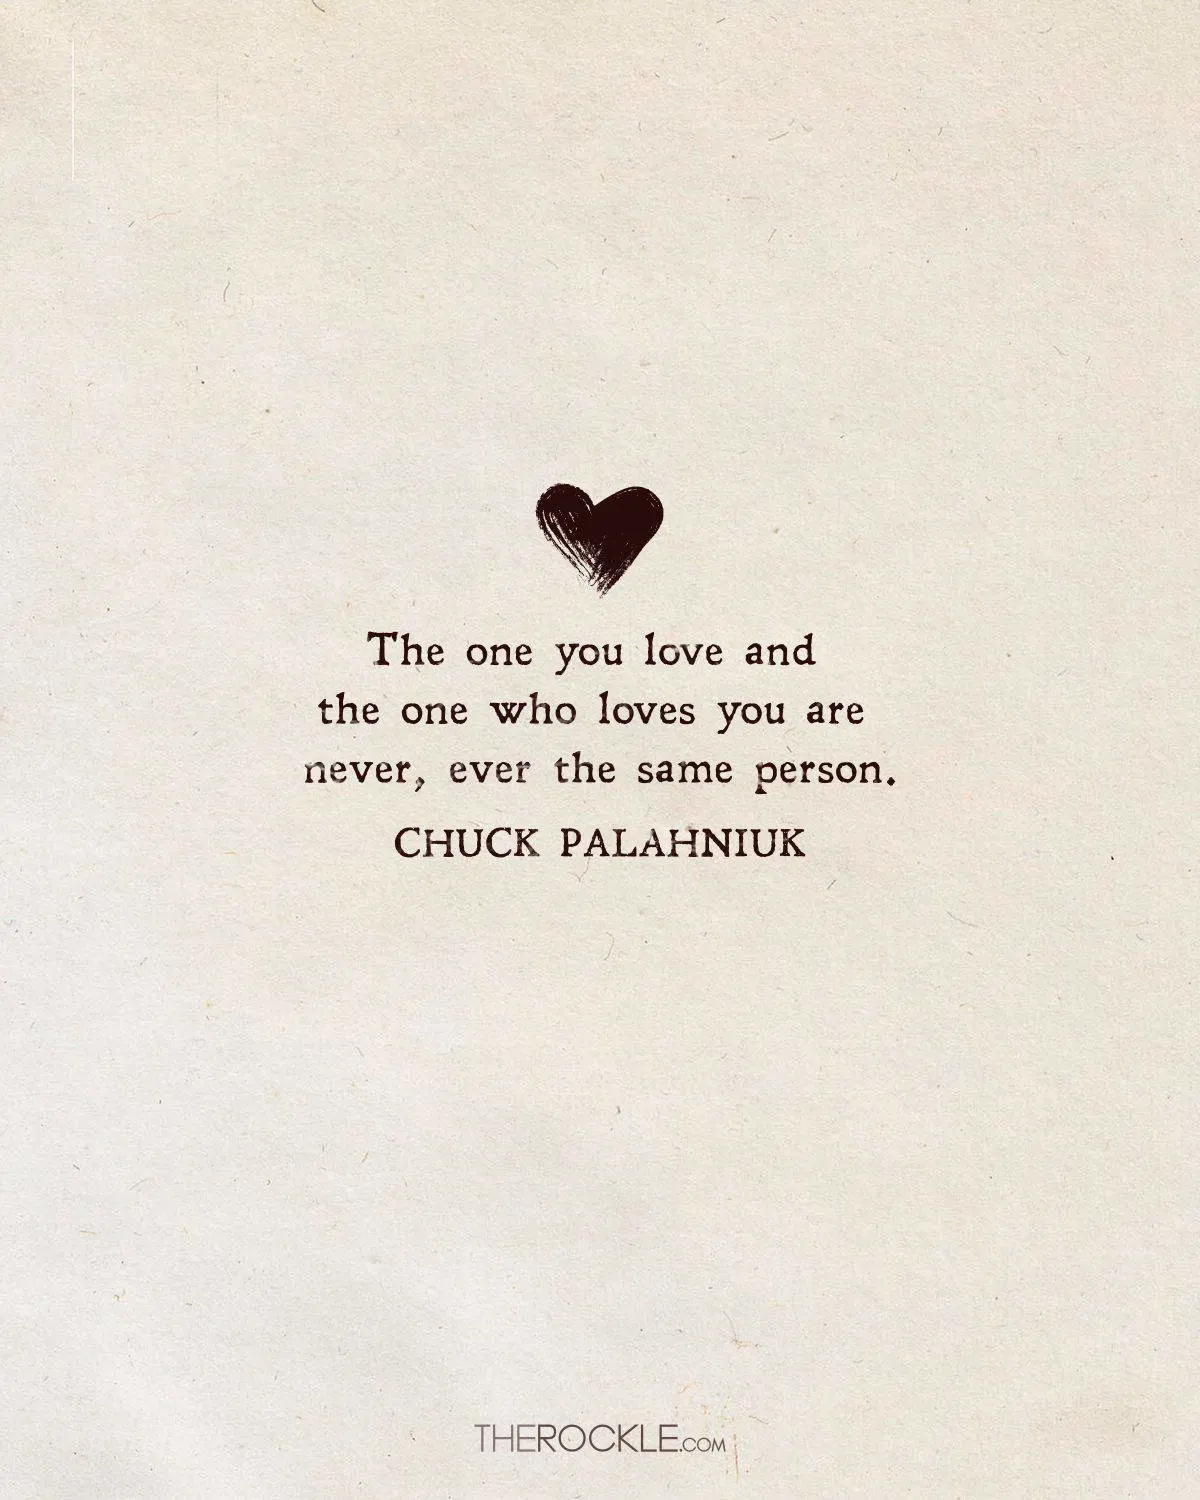 Chuck Palahniuk sad quote about love